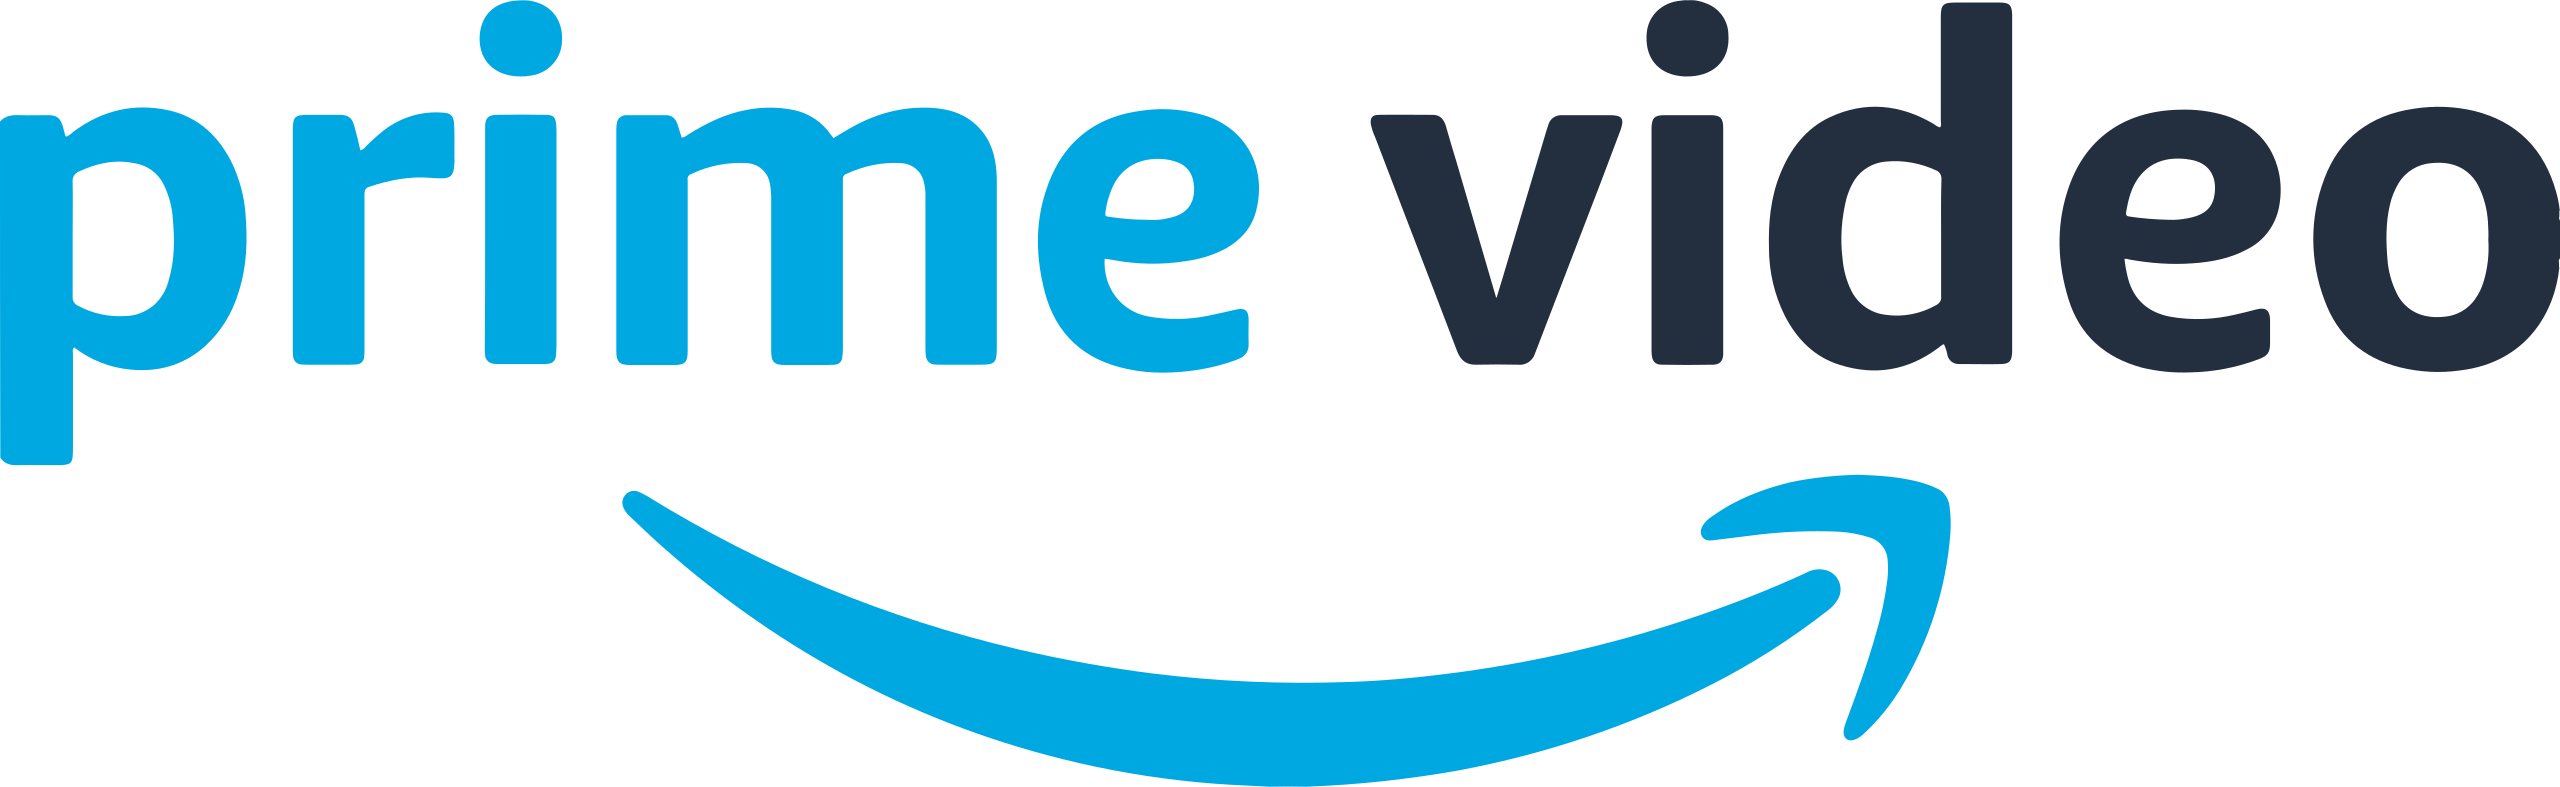 Amazon_Prime_Video_logo.svg